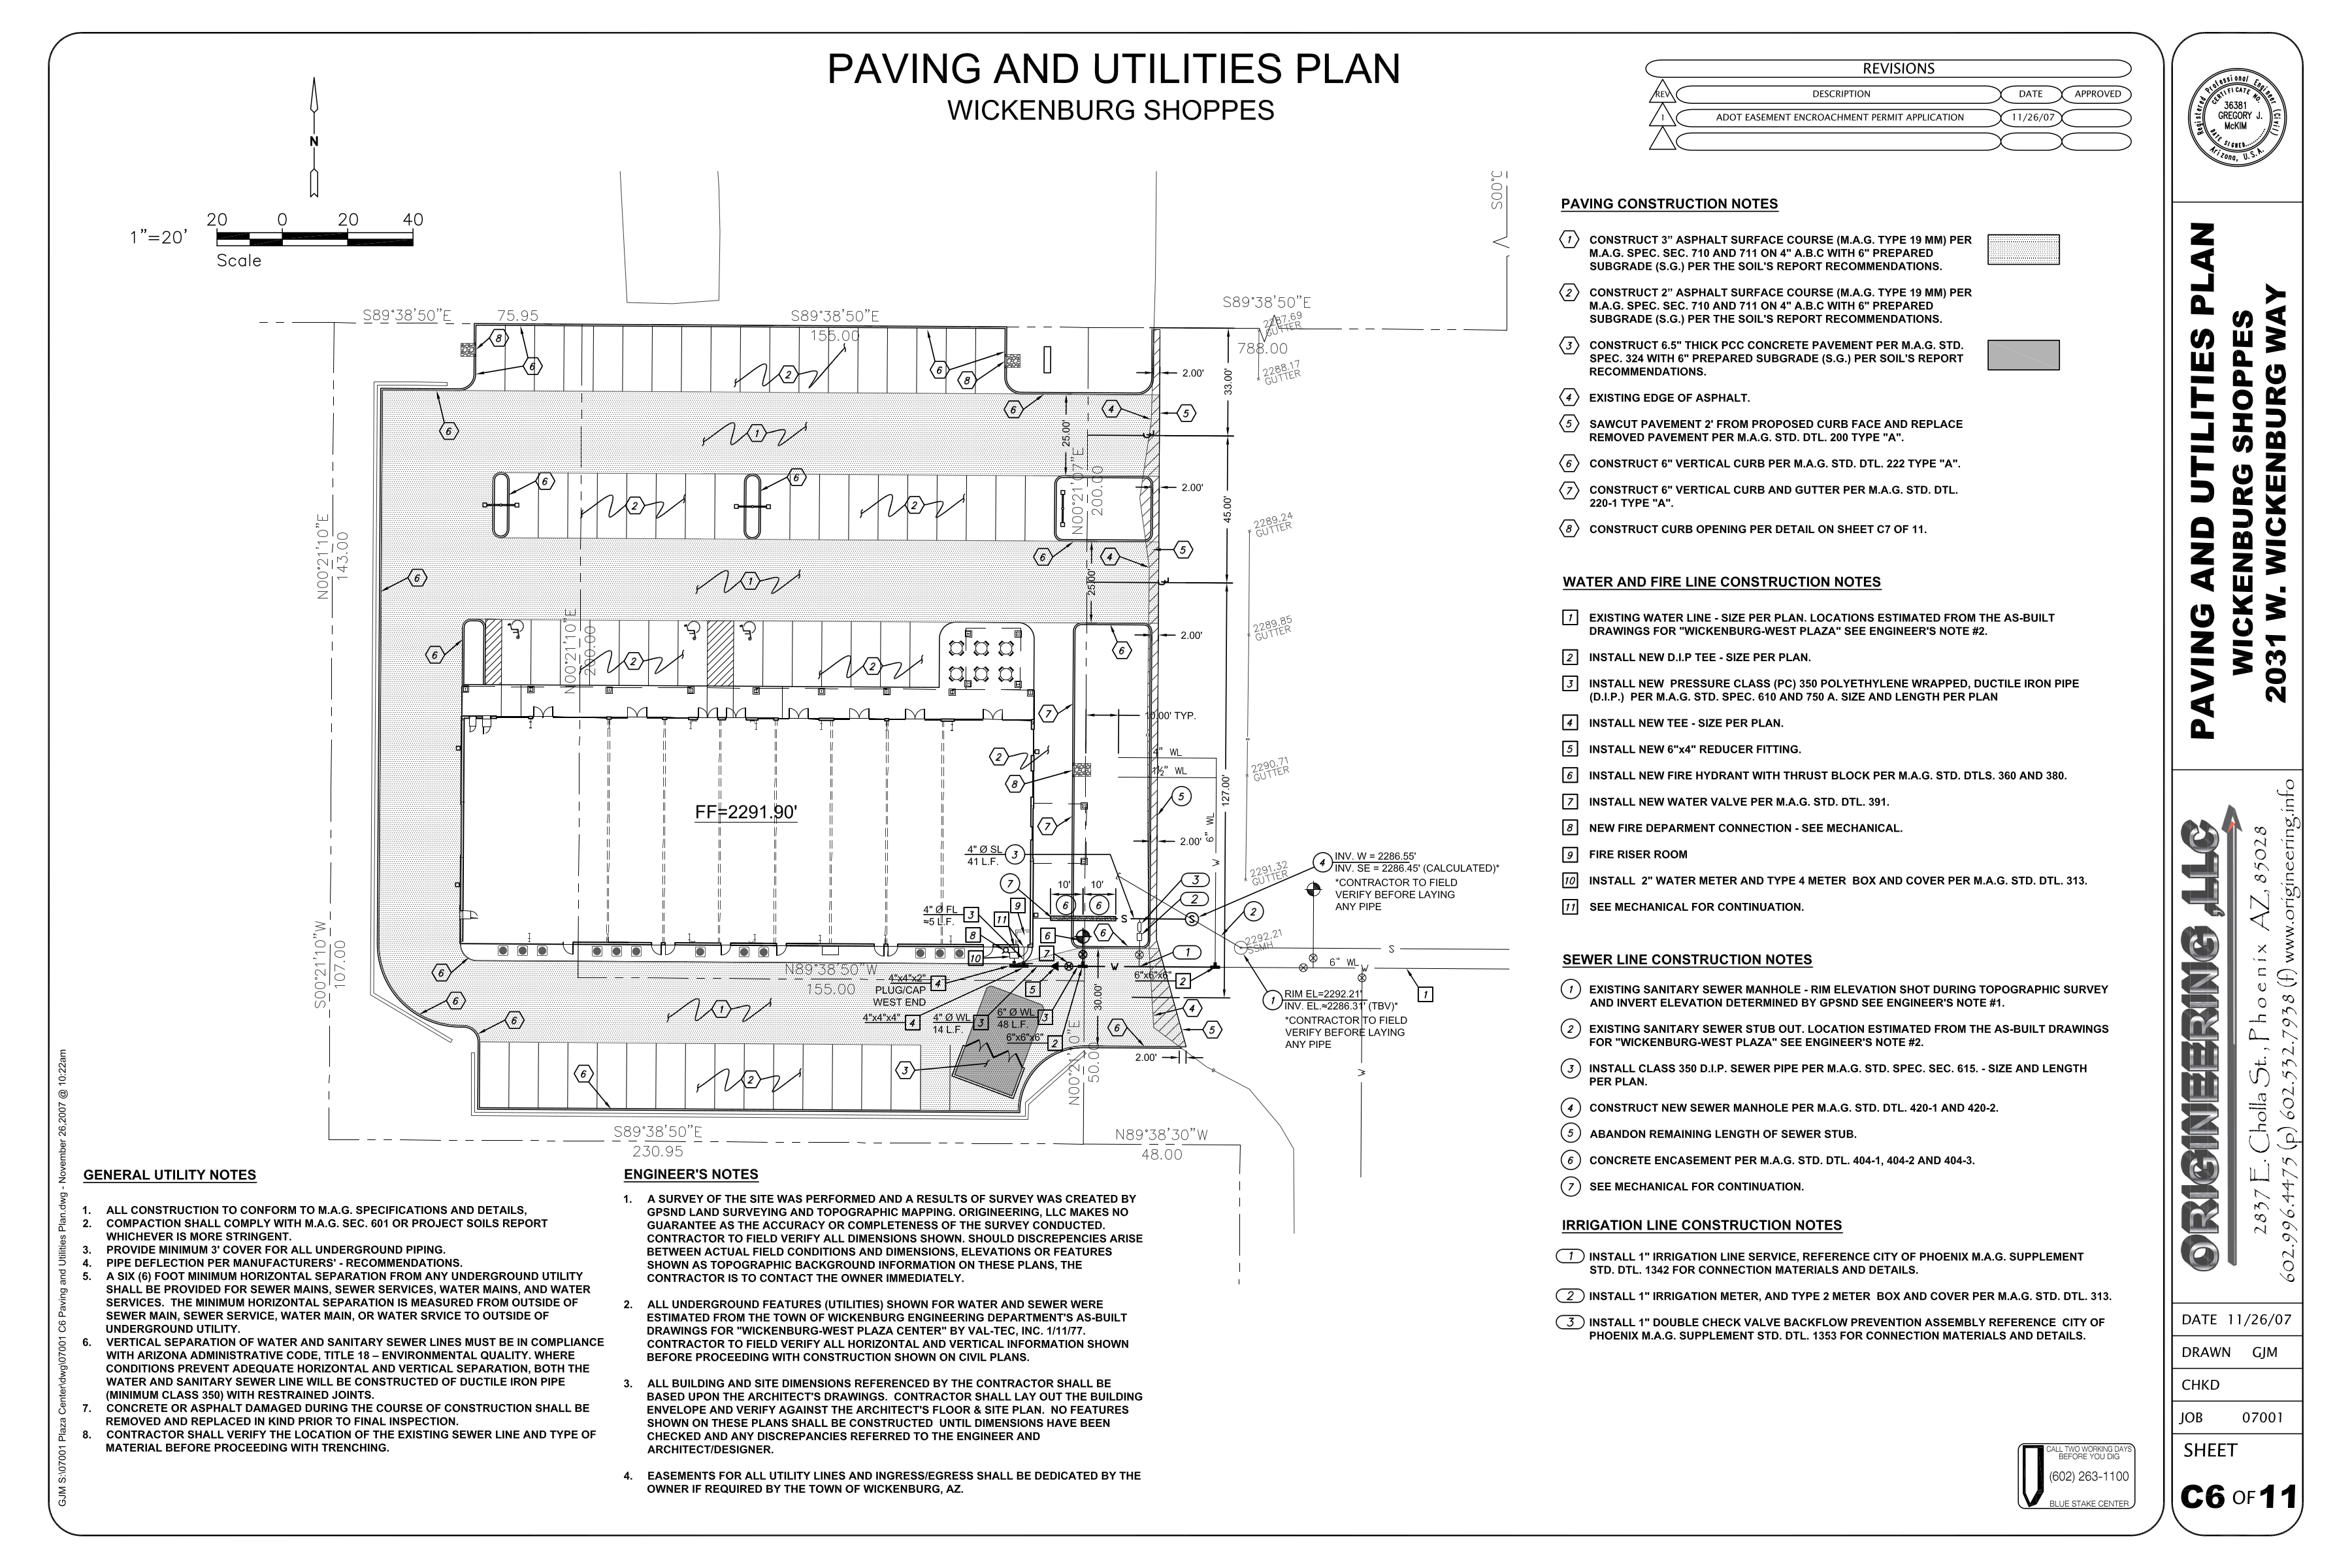 Paving and Utilities Plan Wickenburg Shoppes